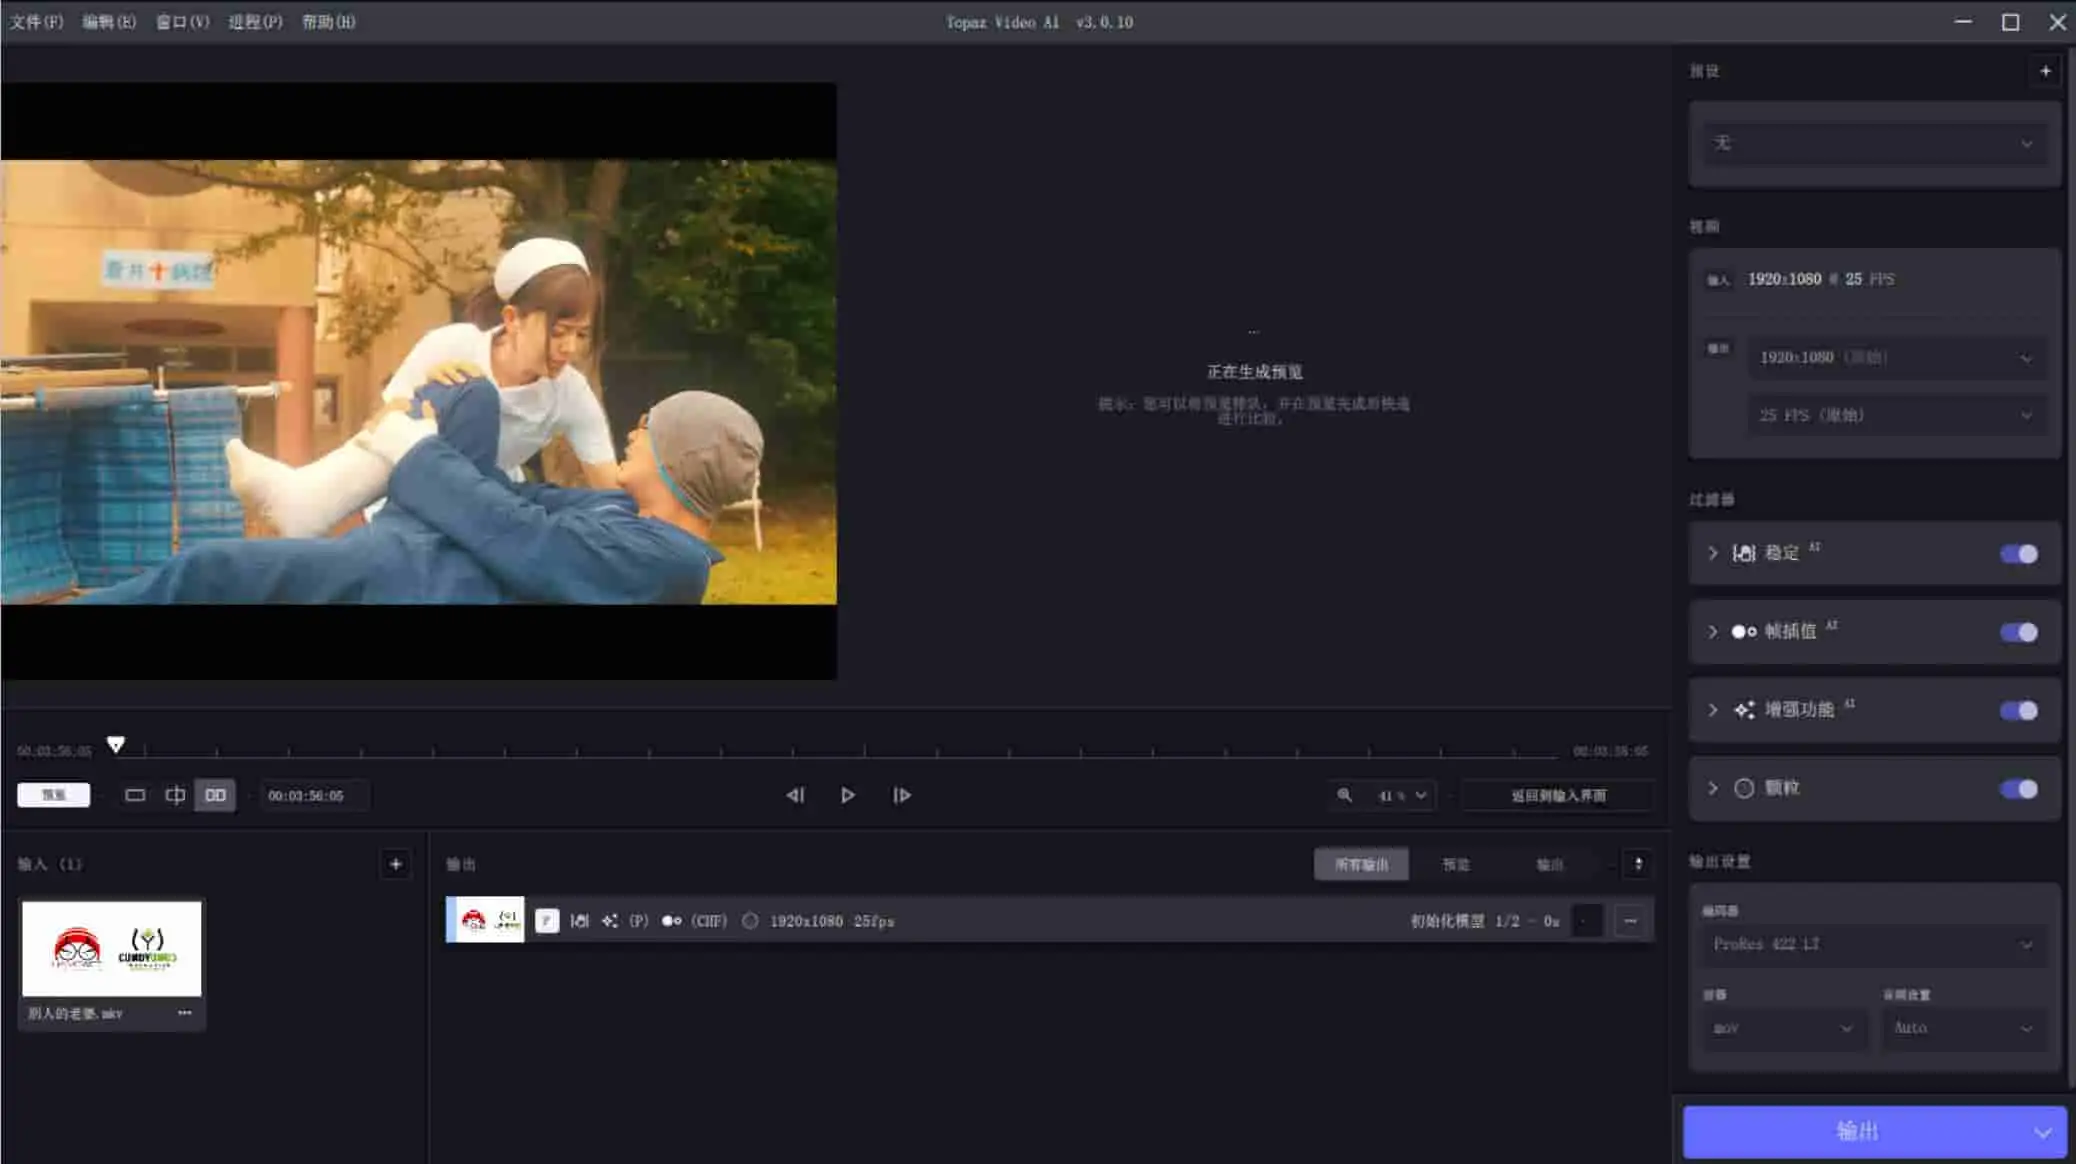 Topaz Video AI v3.0.10 视频修复软件免登录中文汉化激活版